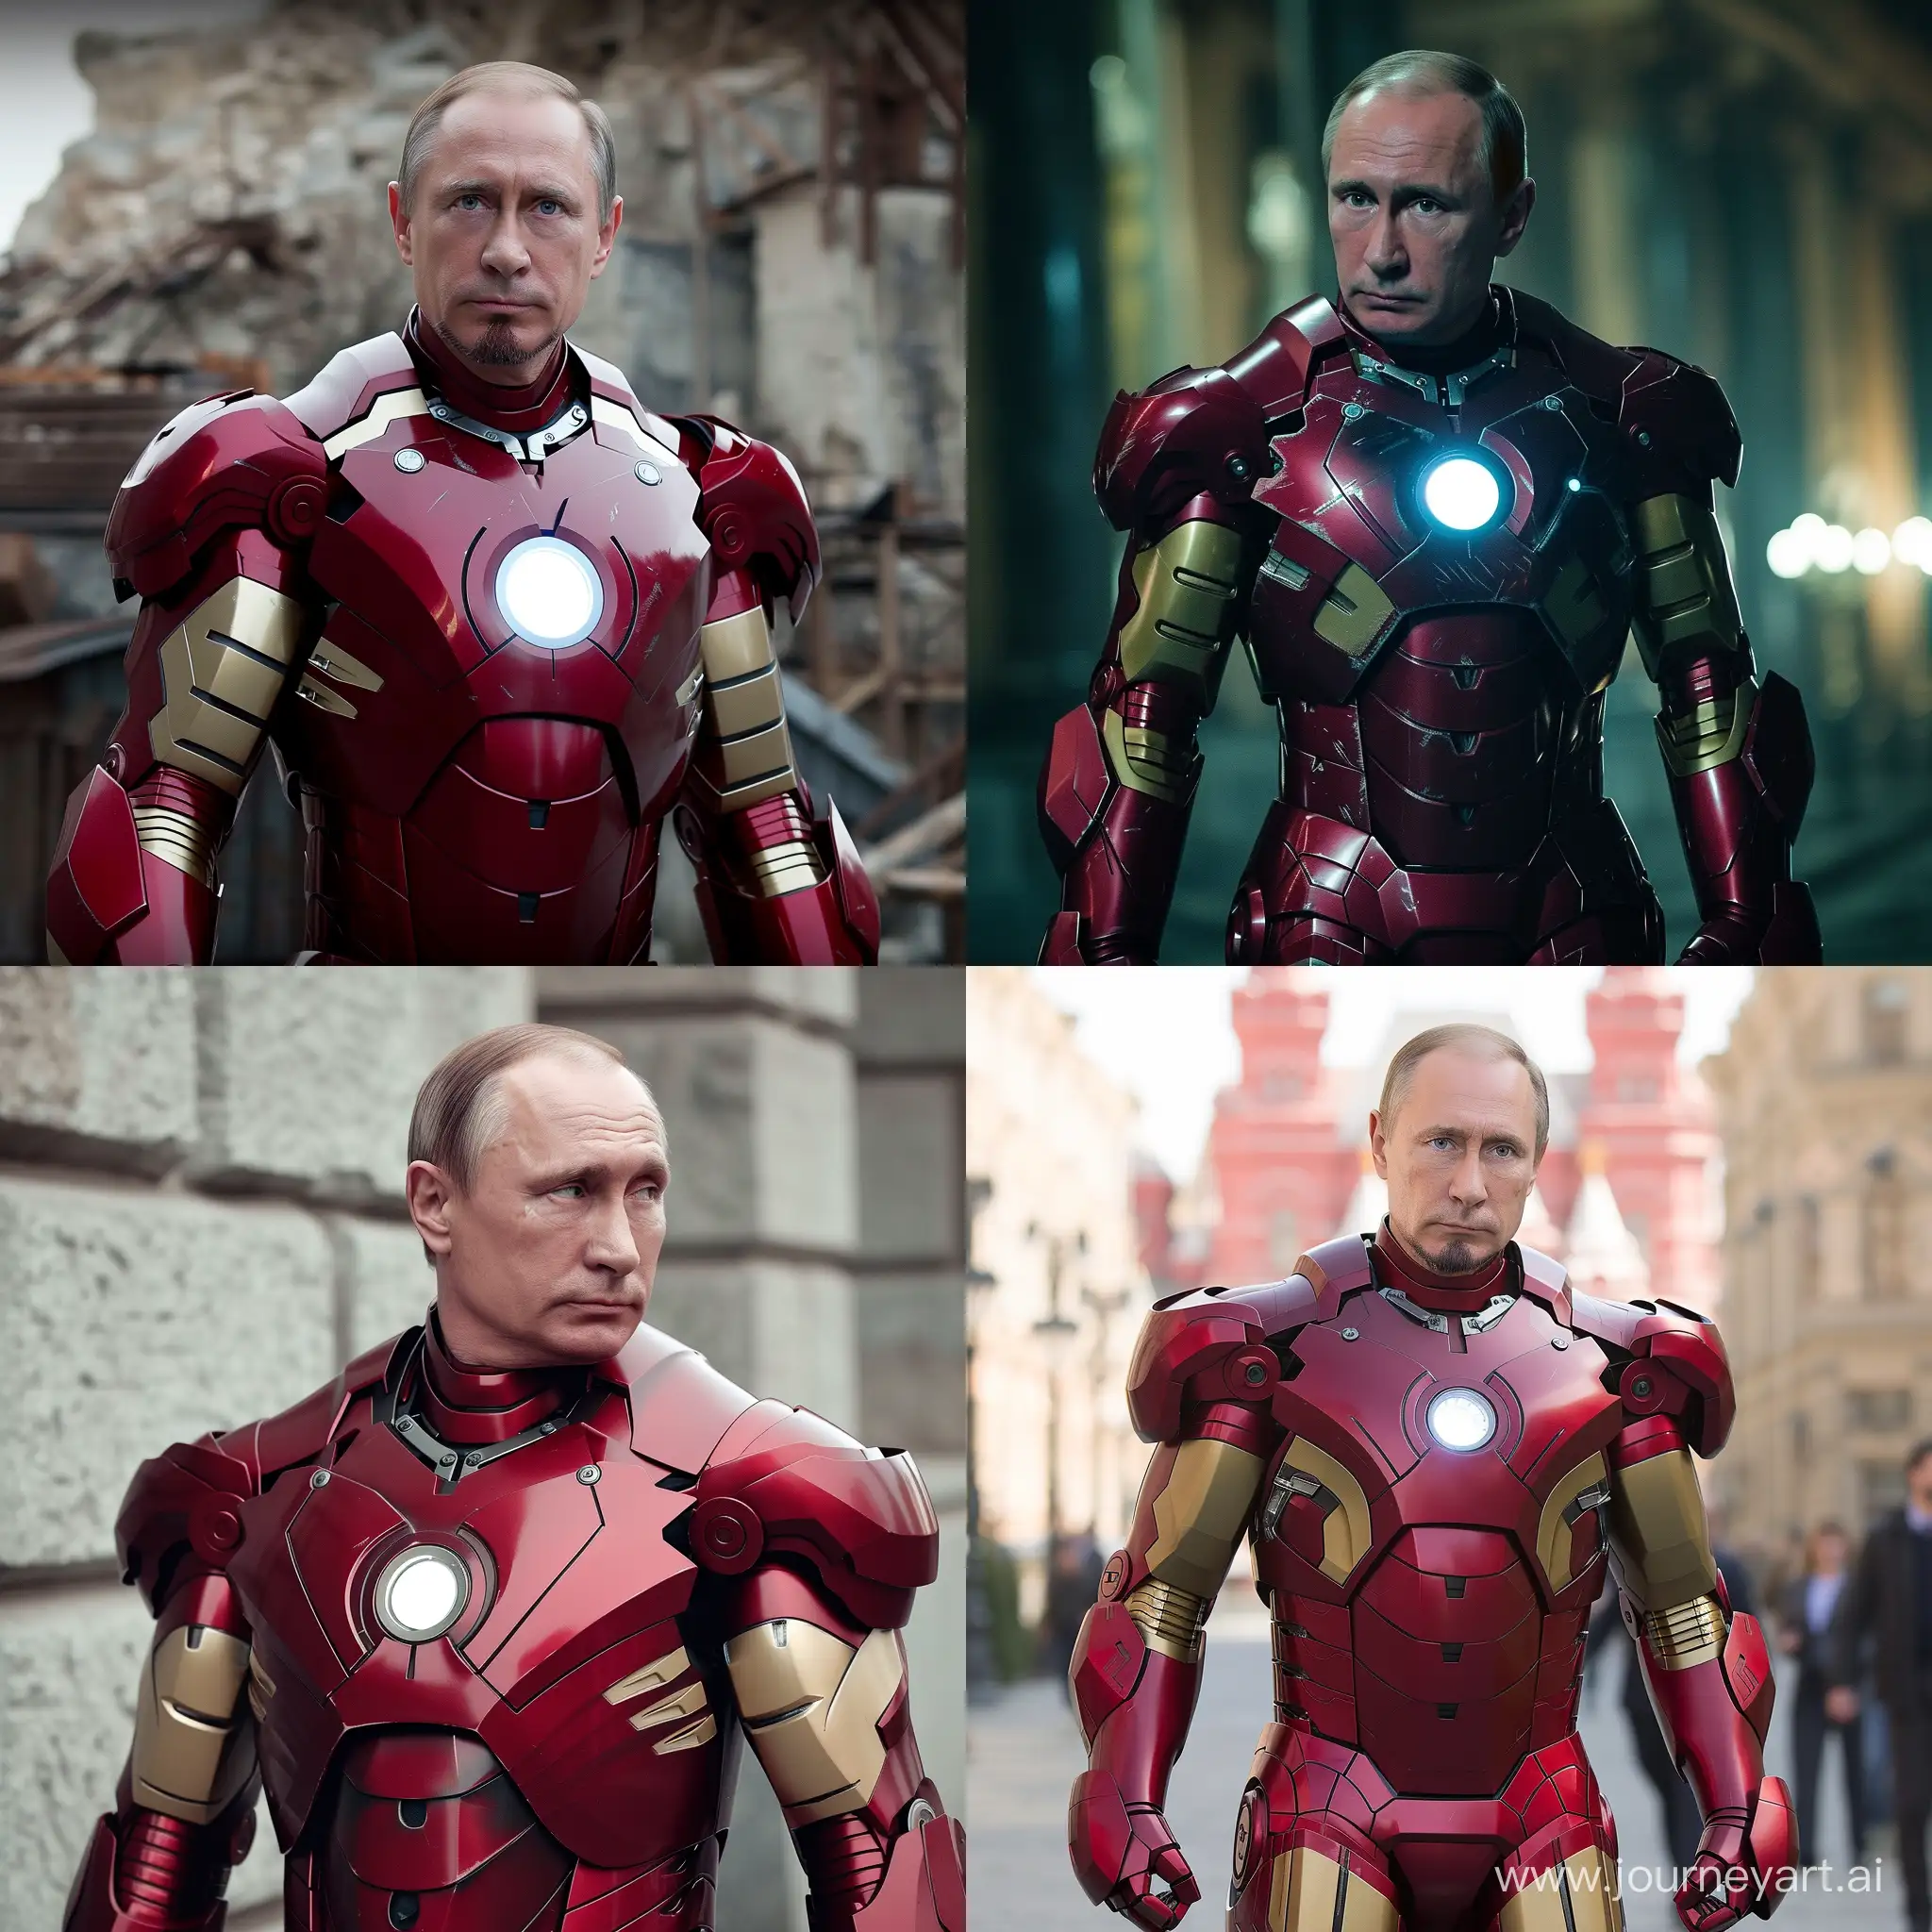 Putin-Transforms-into-Iron-Man-in-Spectacular-Artwork